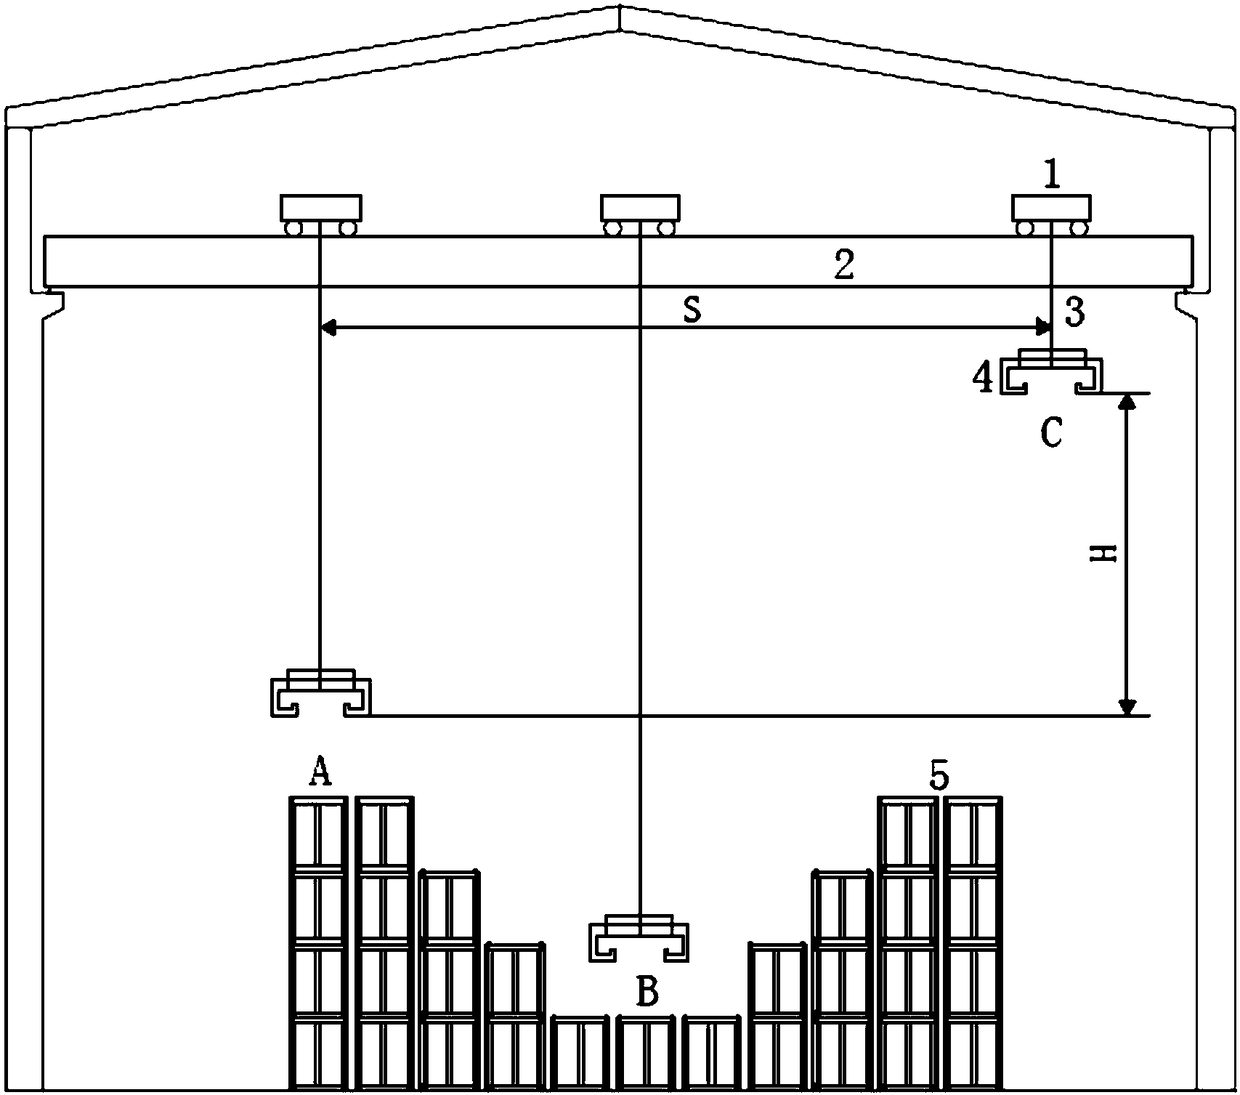 Automatic operation control method for full-automatic bridge-type storage crane